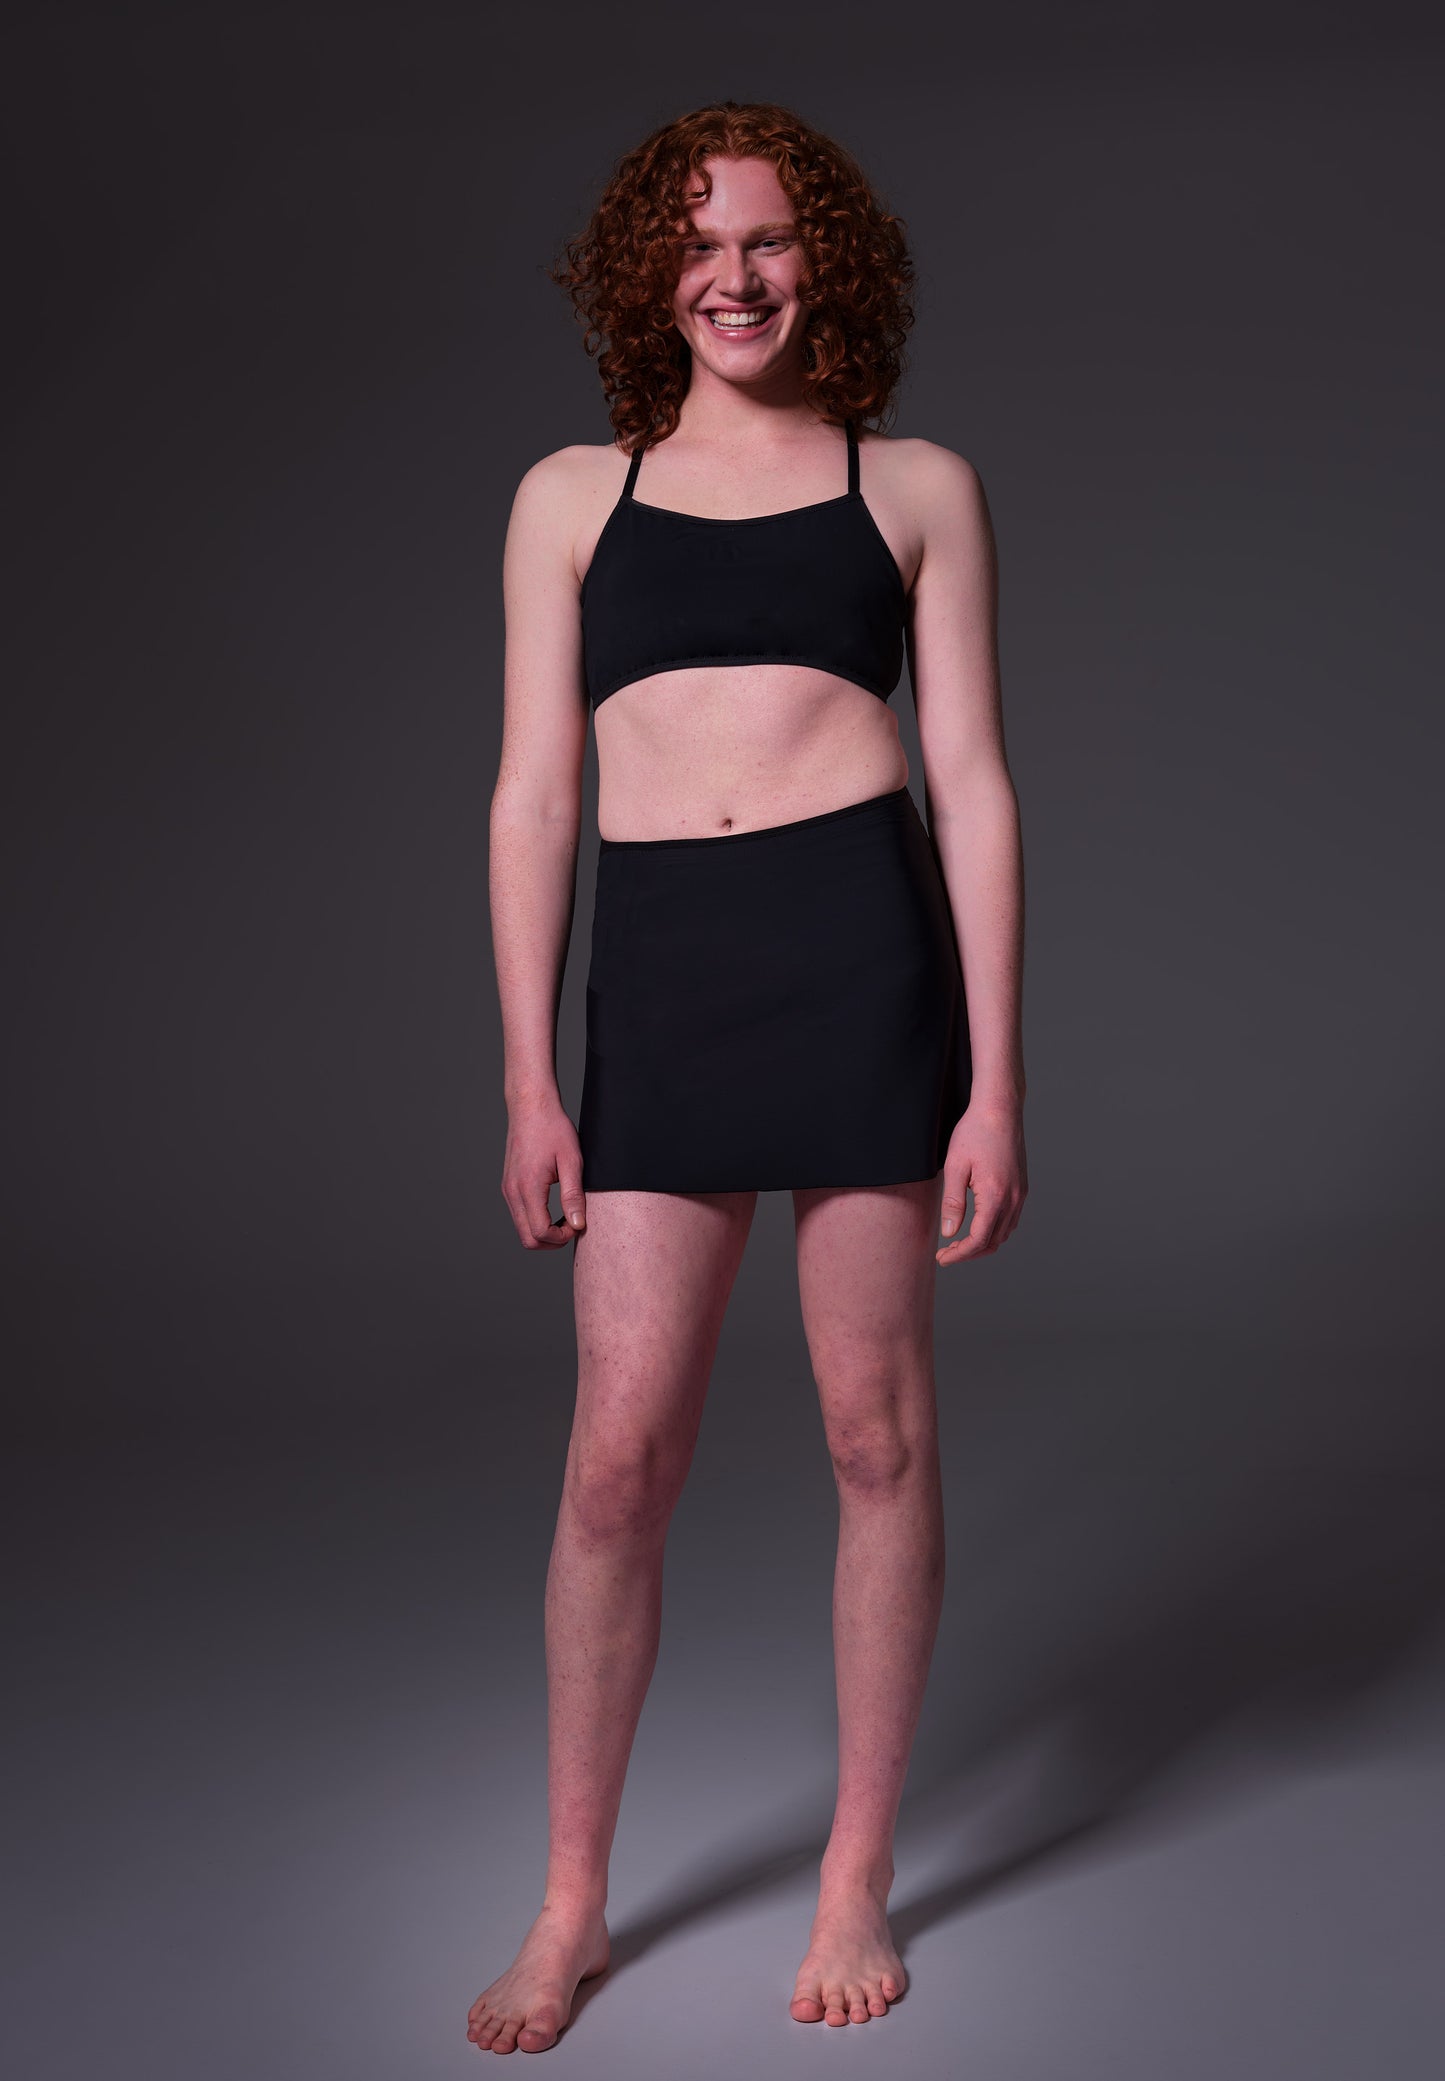 Model Sweder, front shot of her, wearing the Swim Skirt black